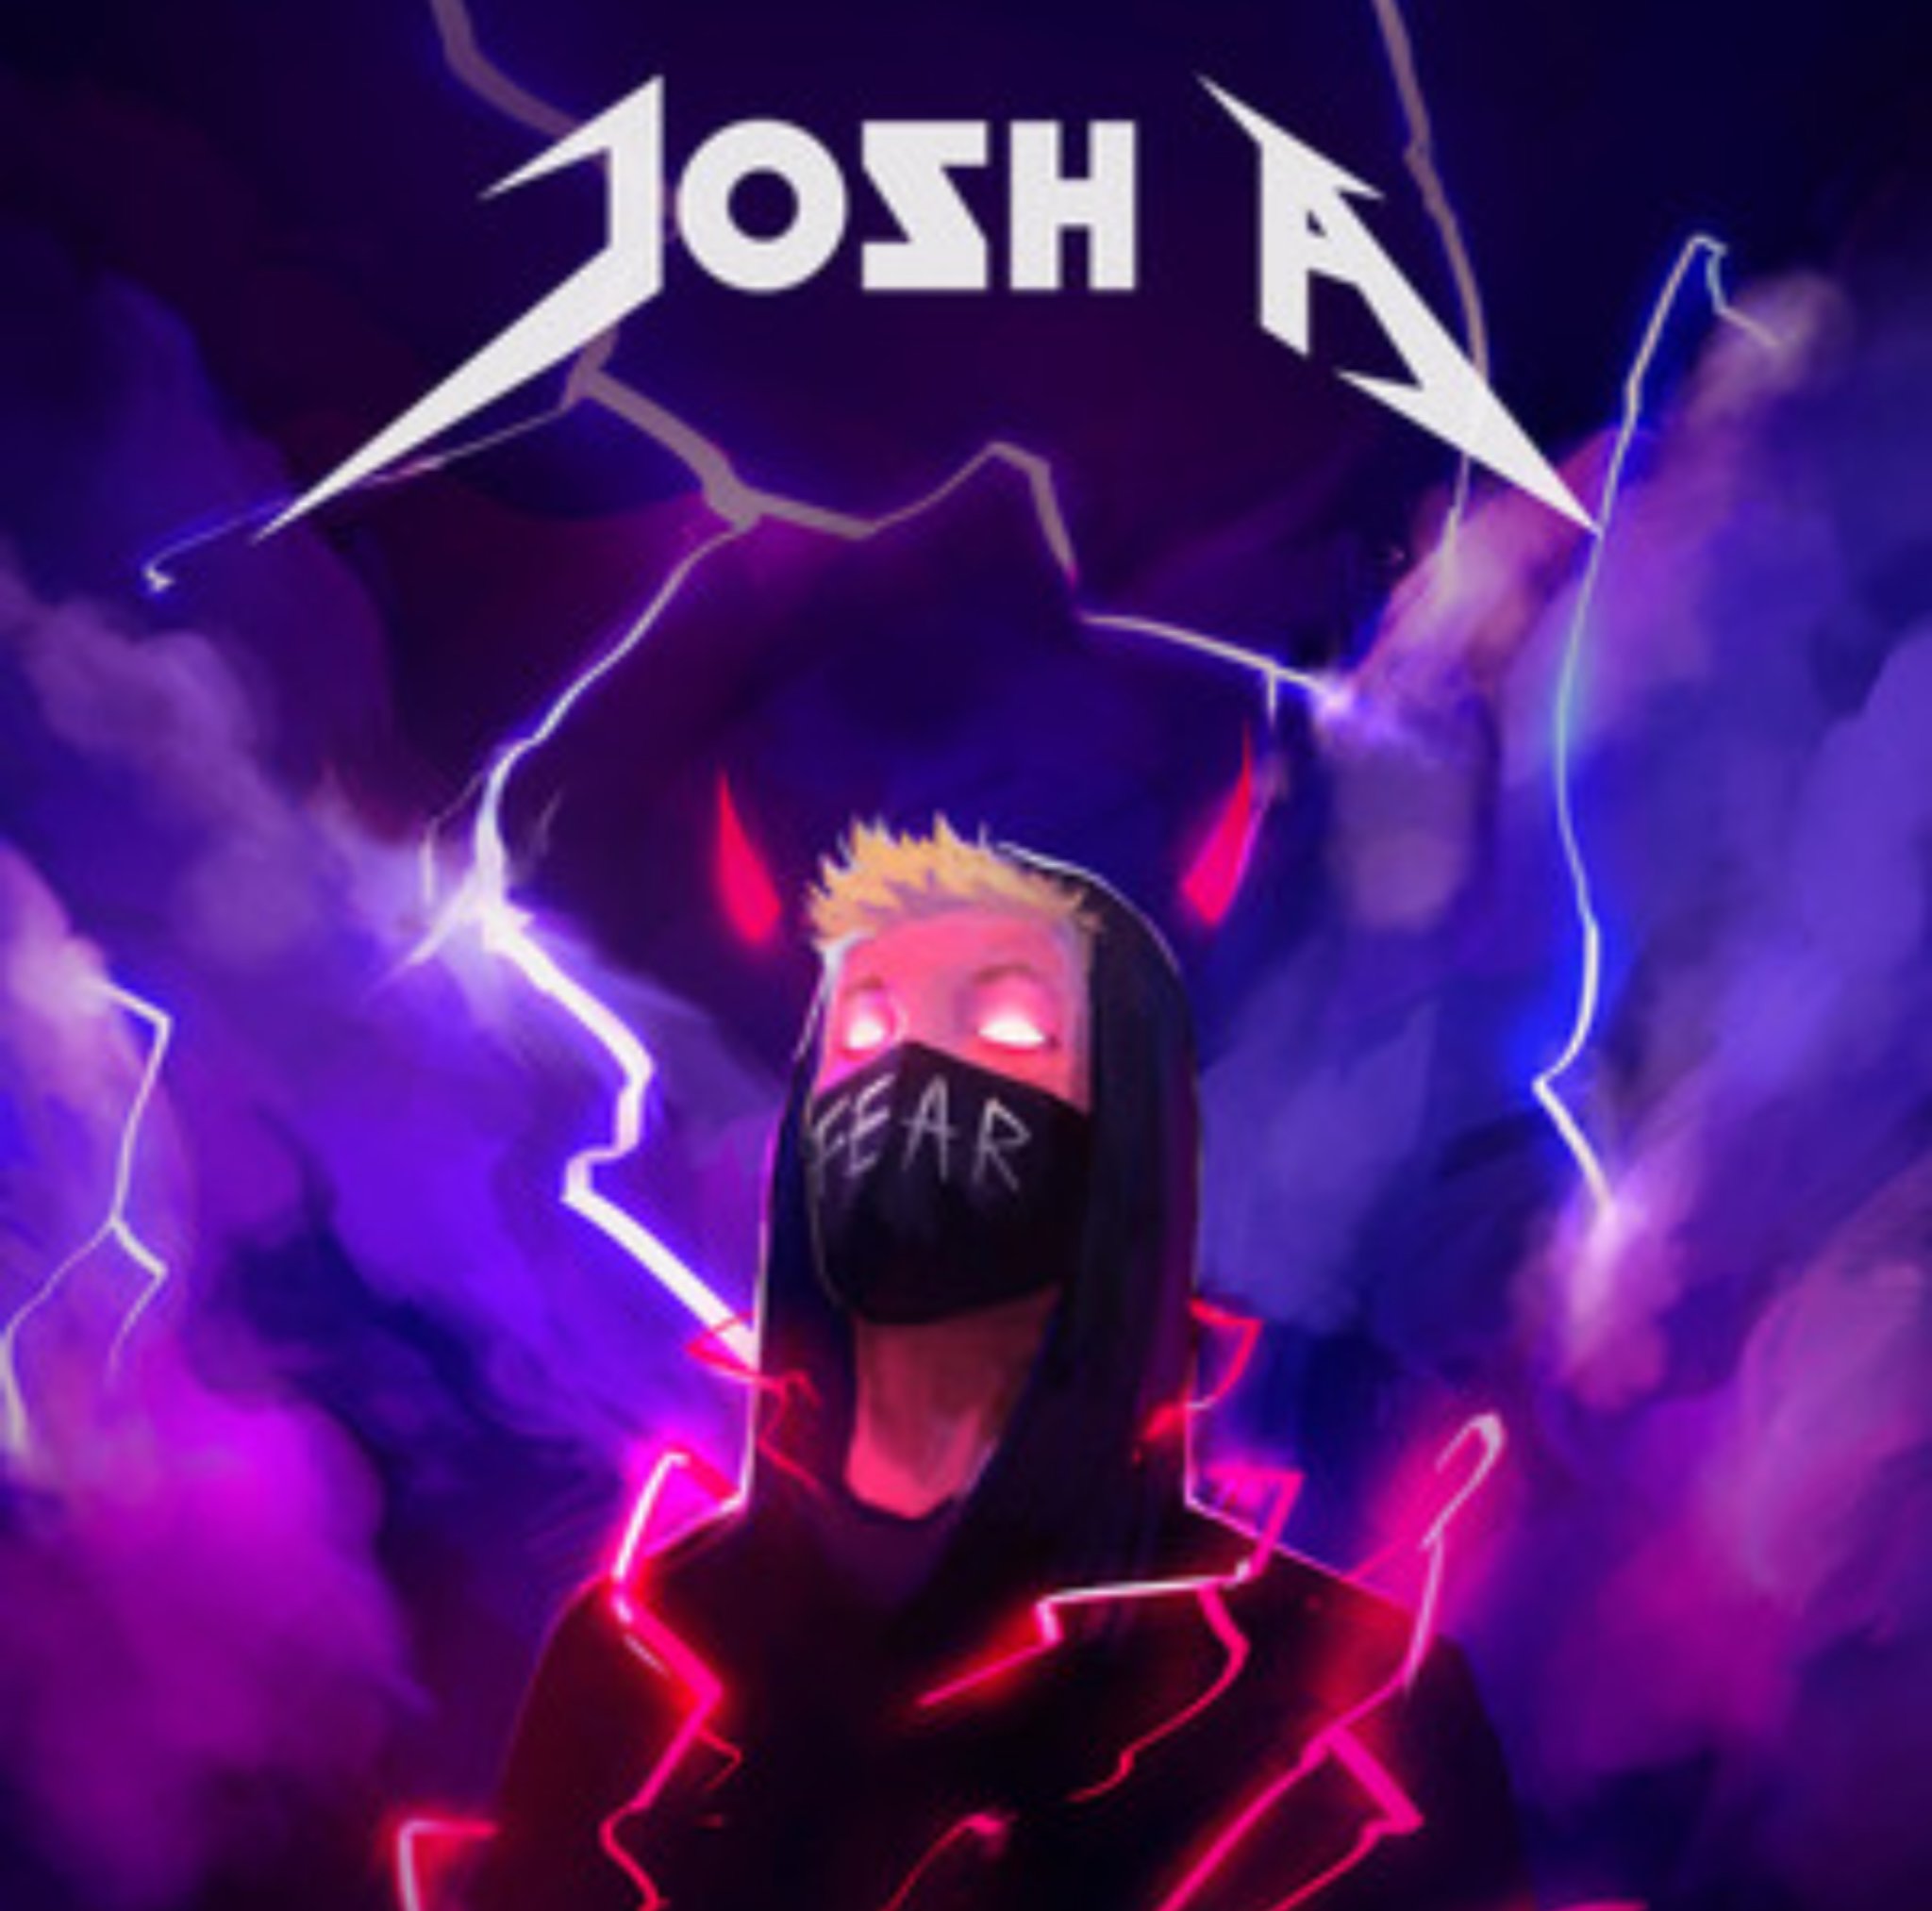 Josh breaks песни. Josh a Pain. Pain Josh обложка. Josh a Fearless. Josh a обложки.